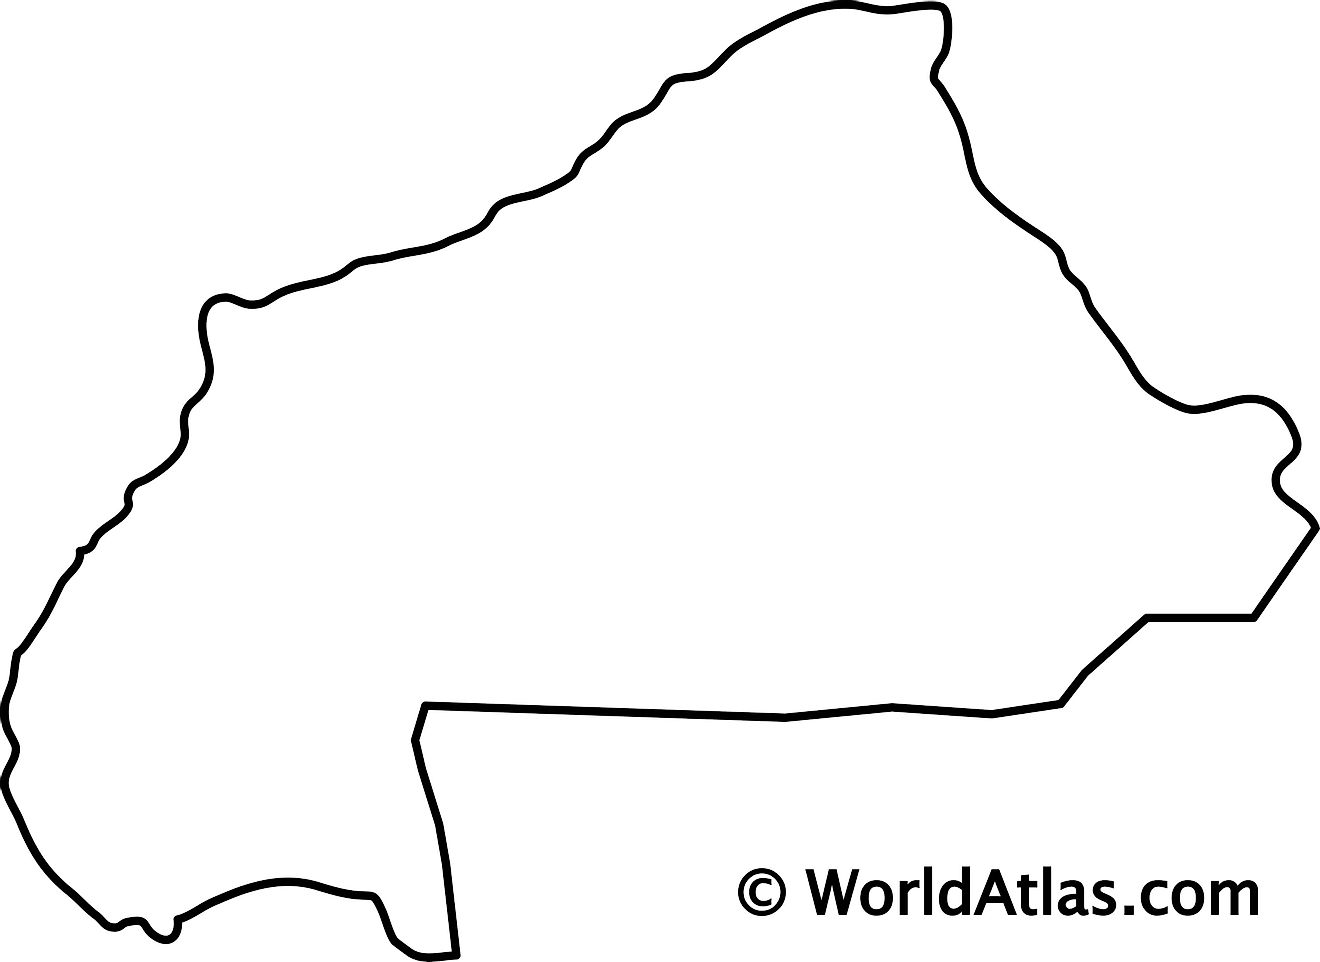 Blank outline map of Burkina Faso